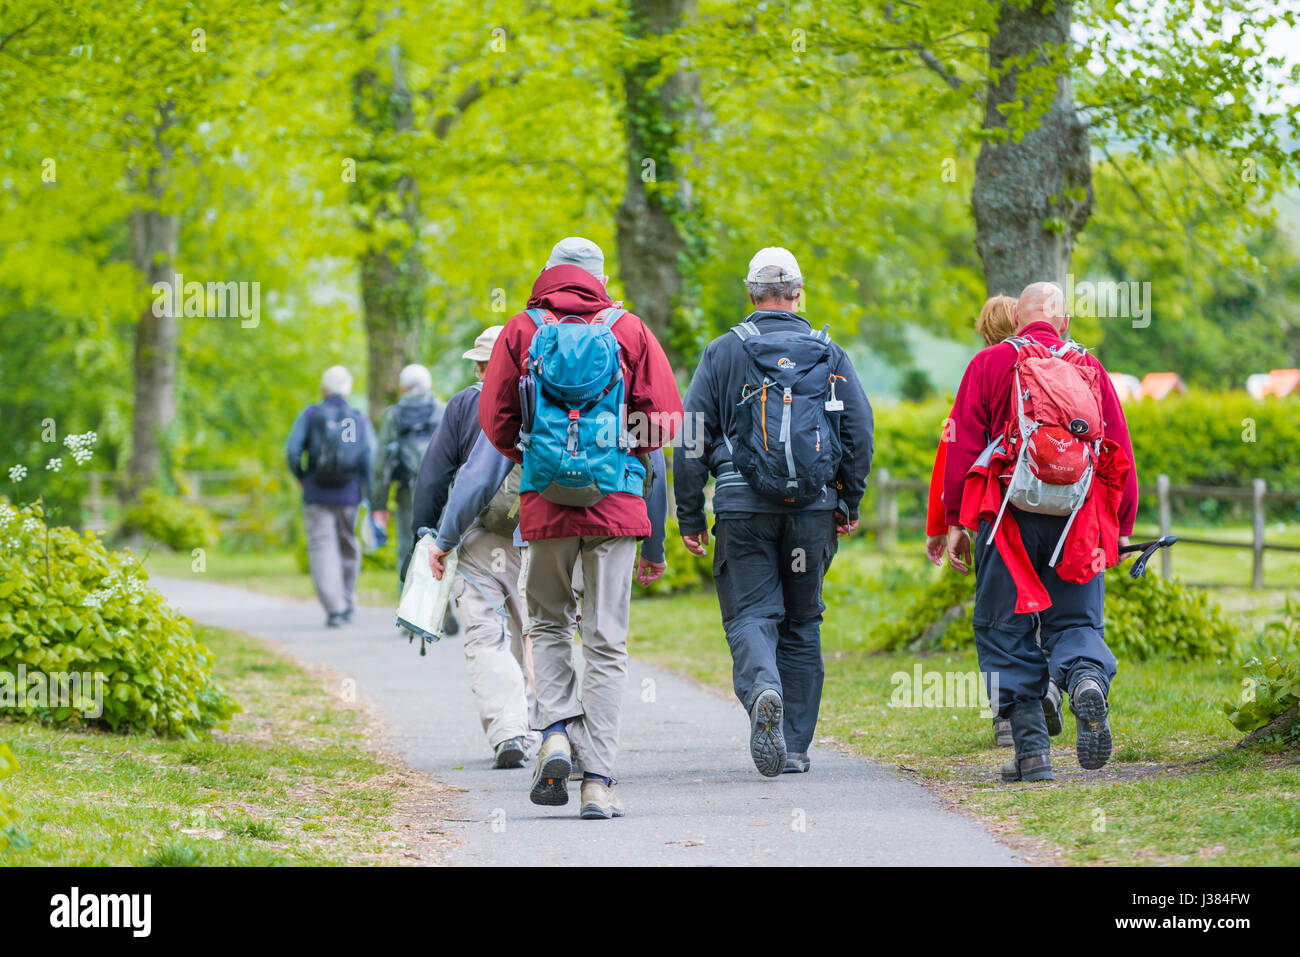 Grupo de ancianos caminando con mochilas preparando para practicar senderismo o excursionismo. Foto de stock